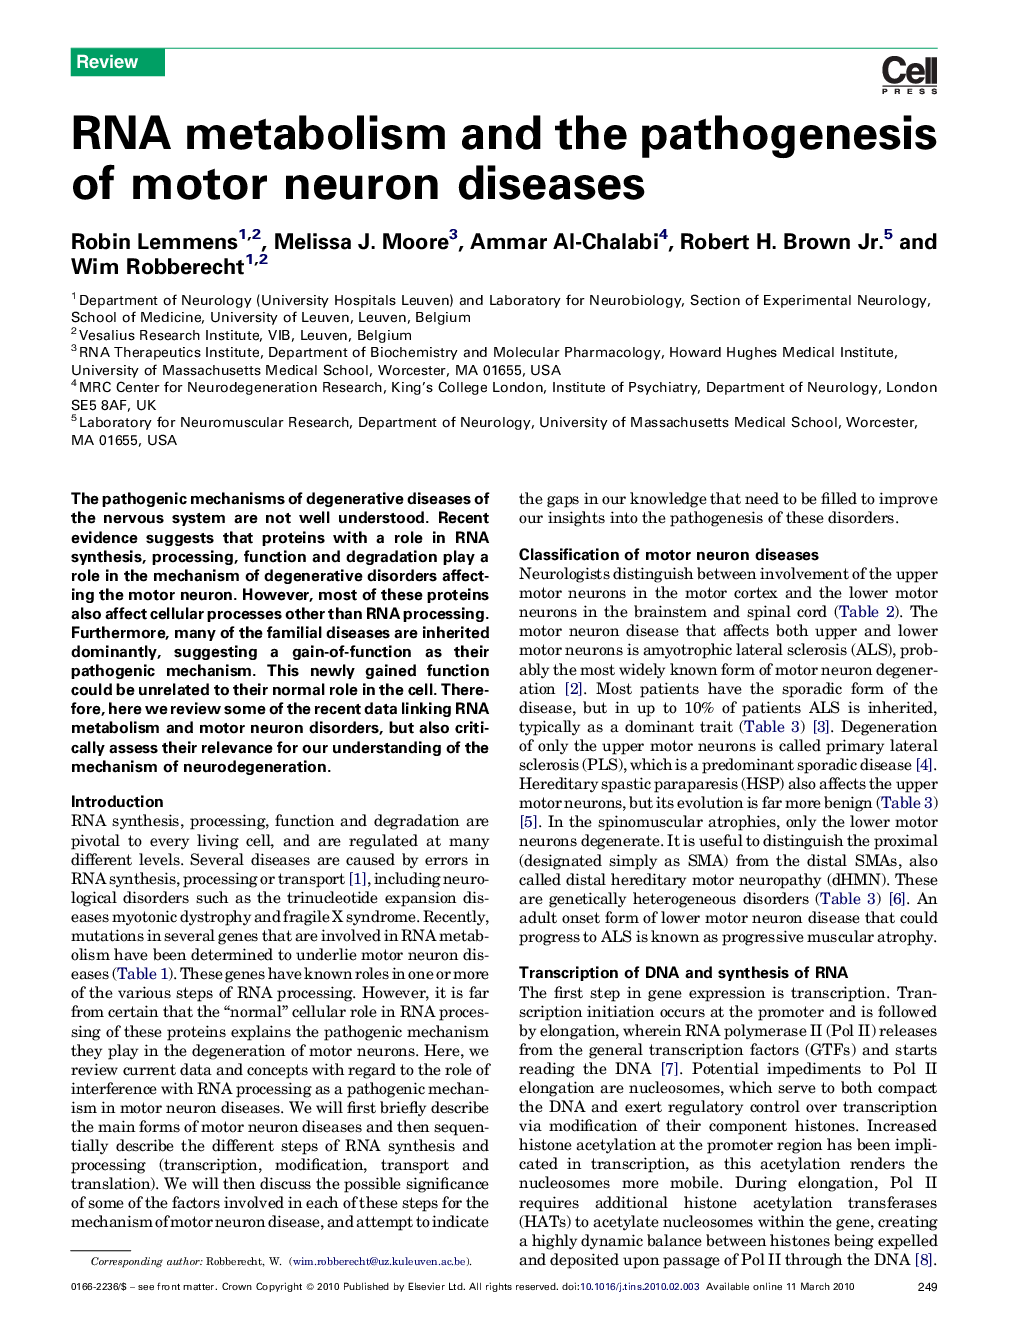 RNA metabolism and the pathogenesis of motor neuron diseases